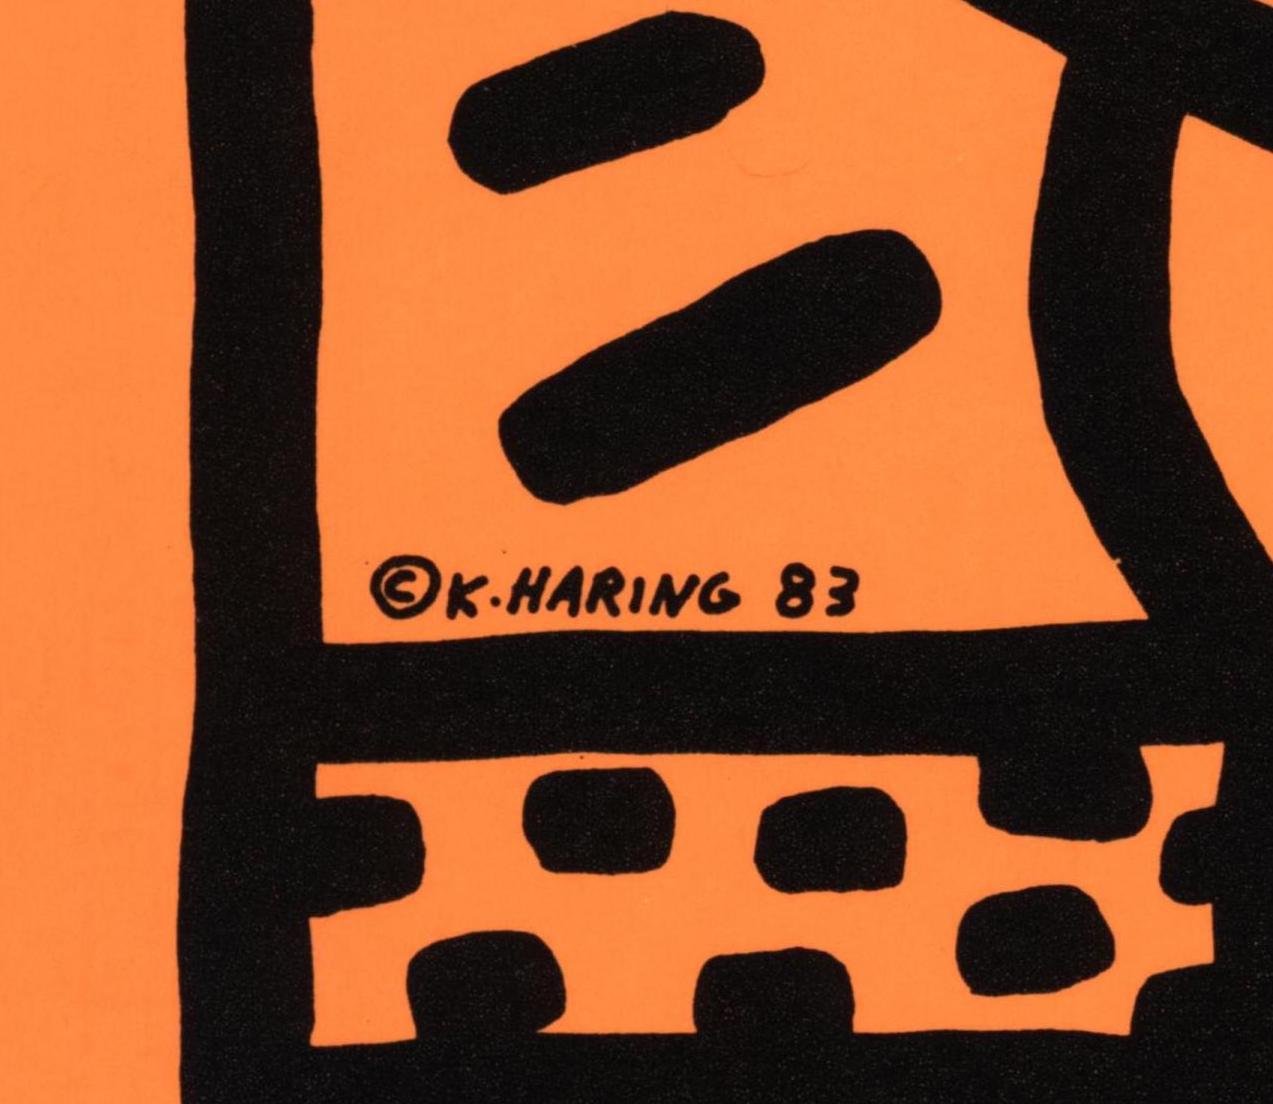 Rare Original Keith Haring Vinyl Record Art 1